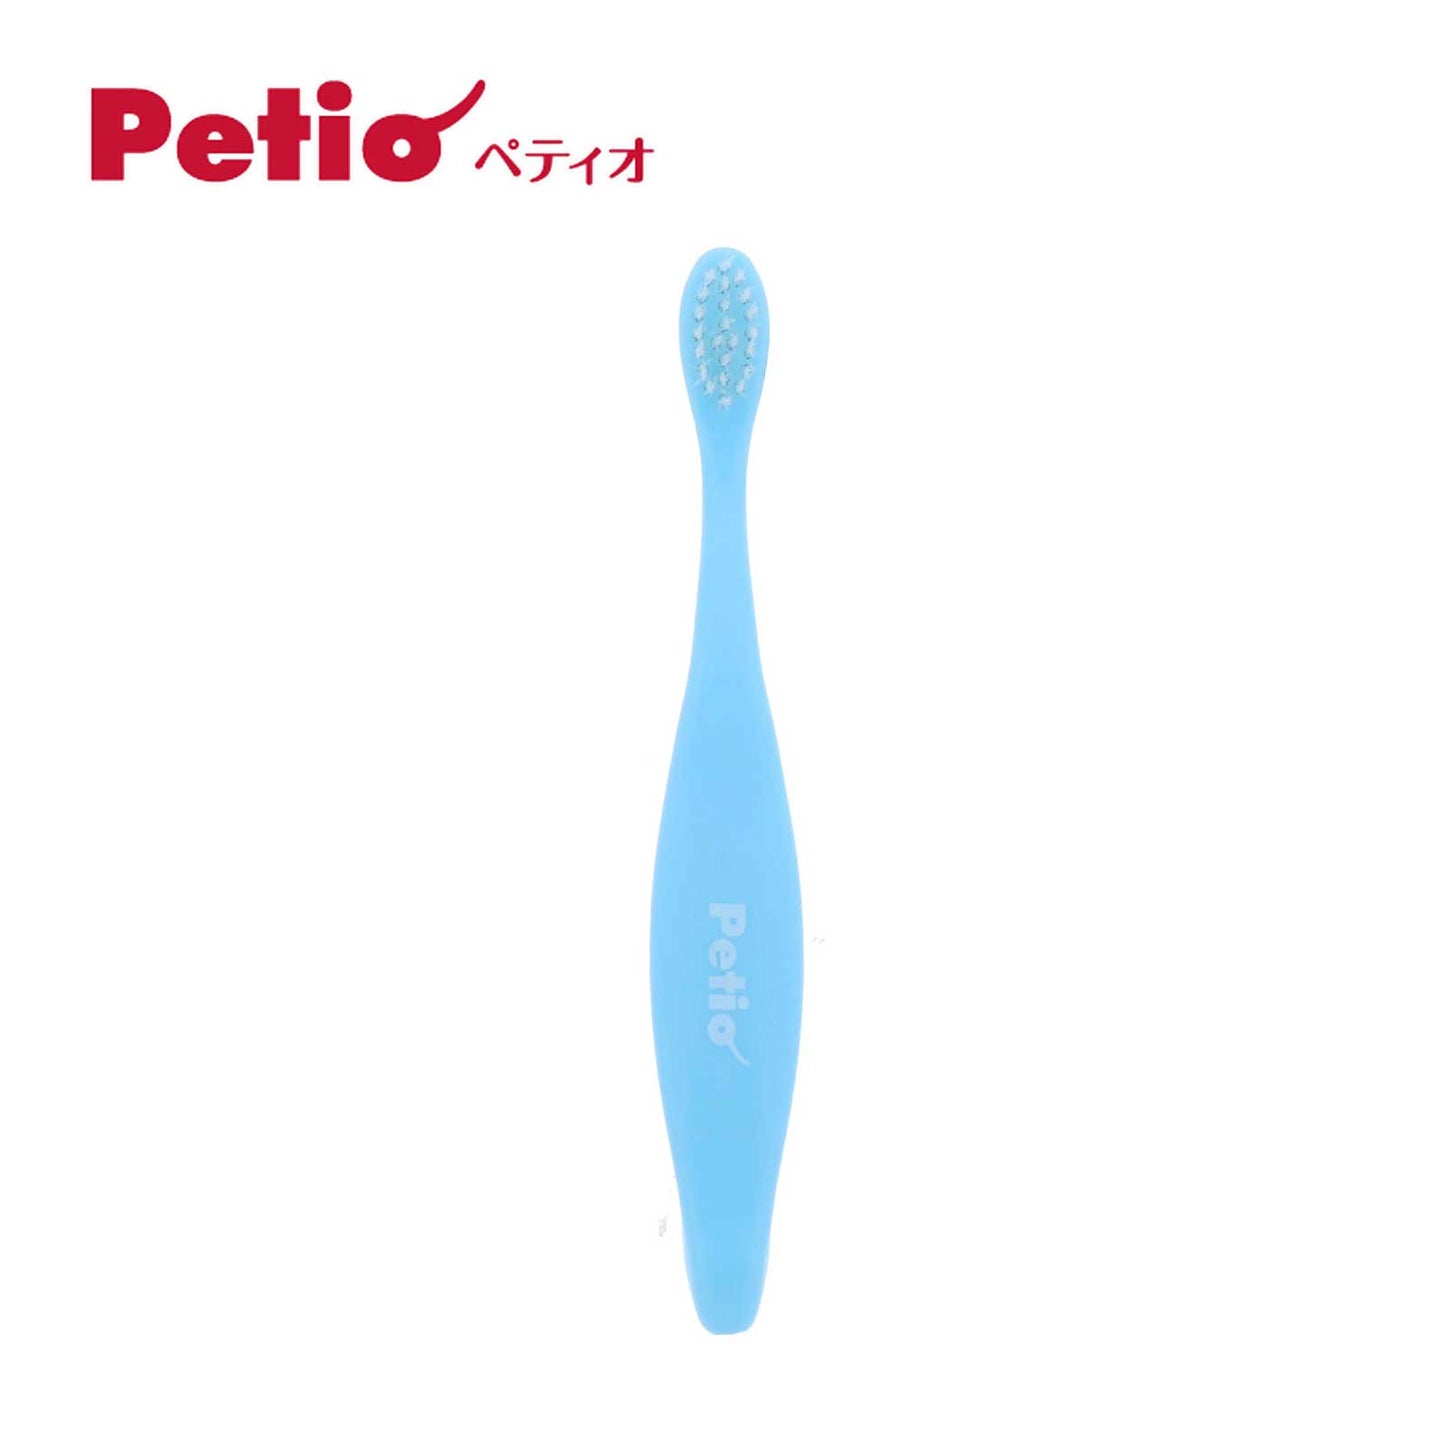 Petio Soft Dental Toothbrush